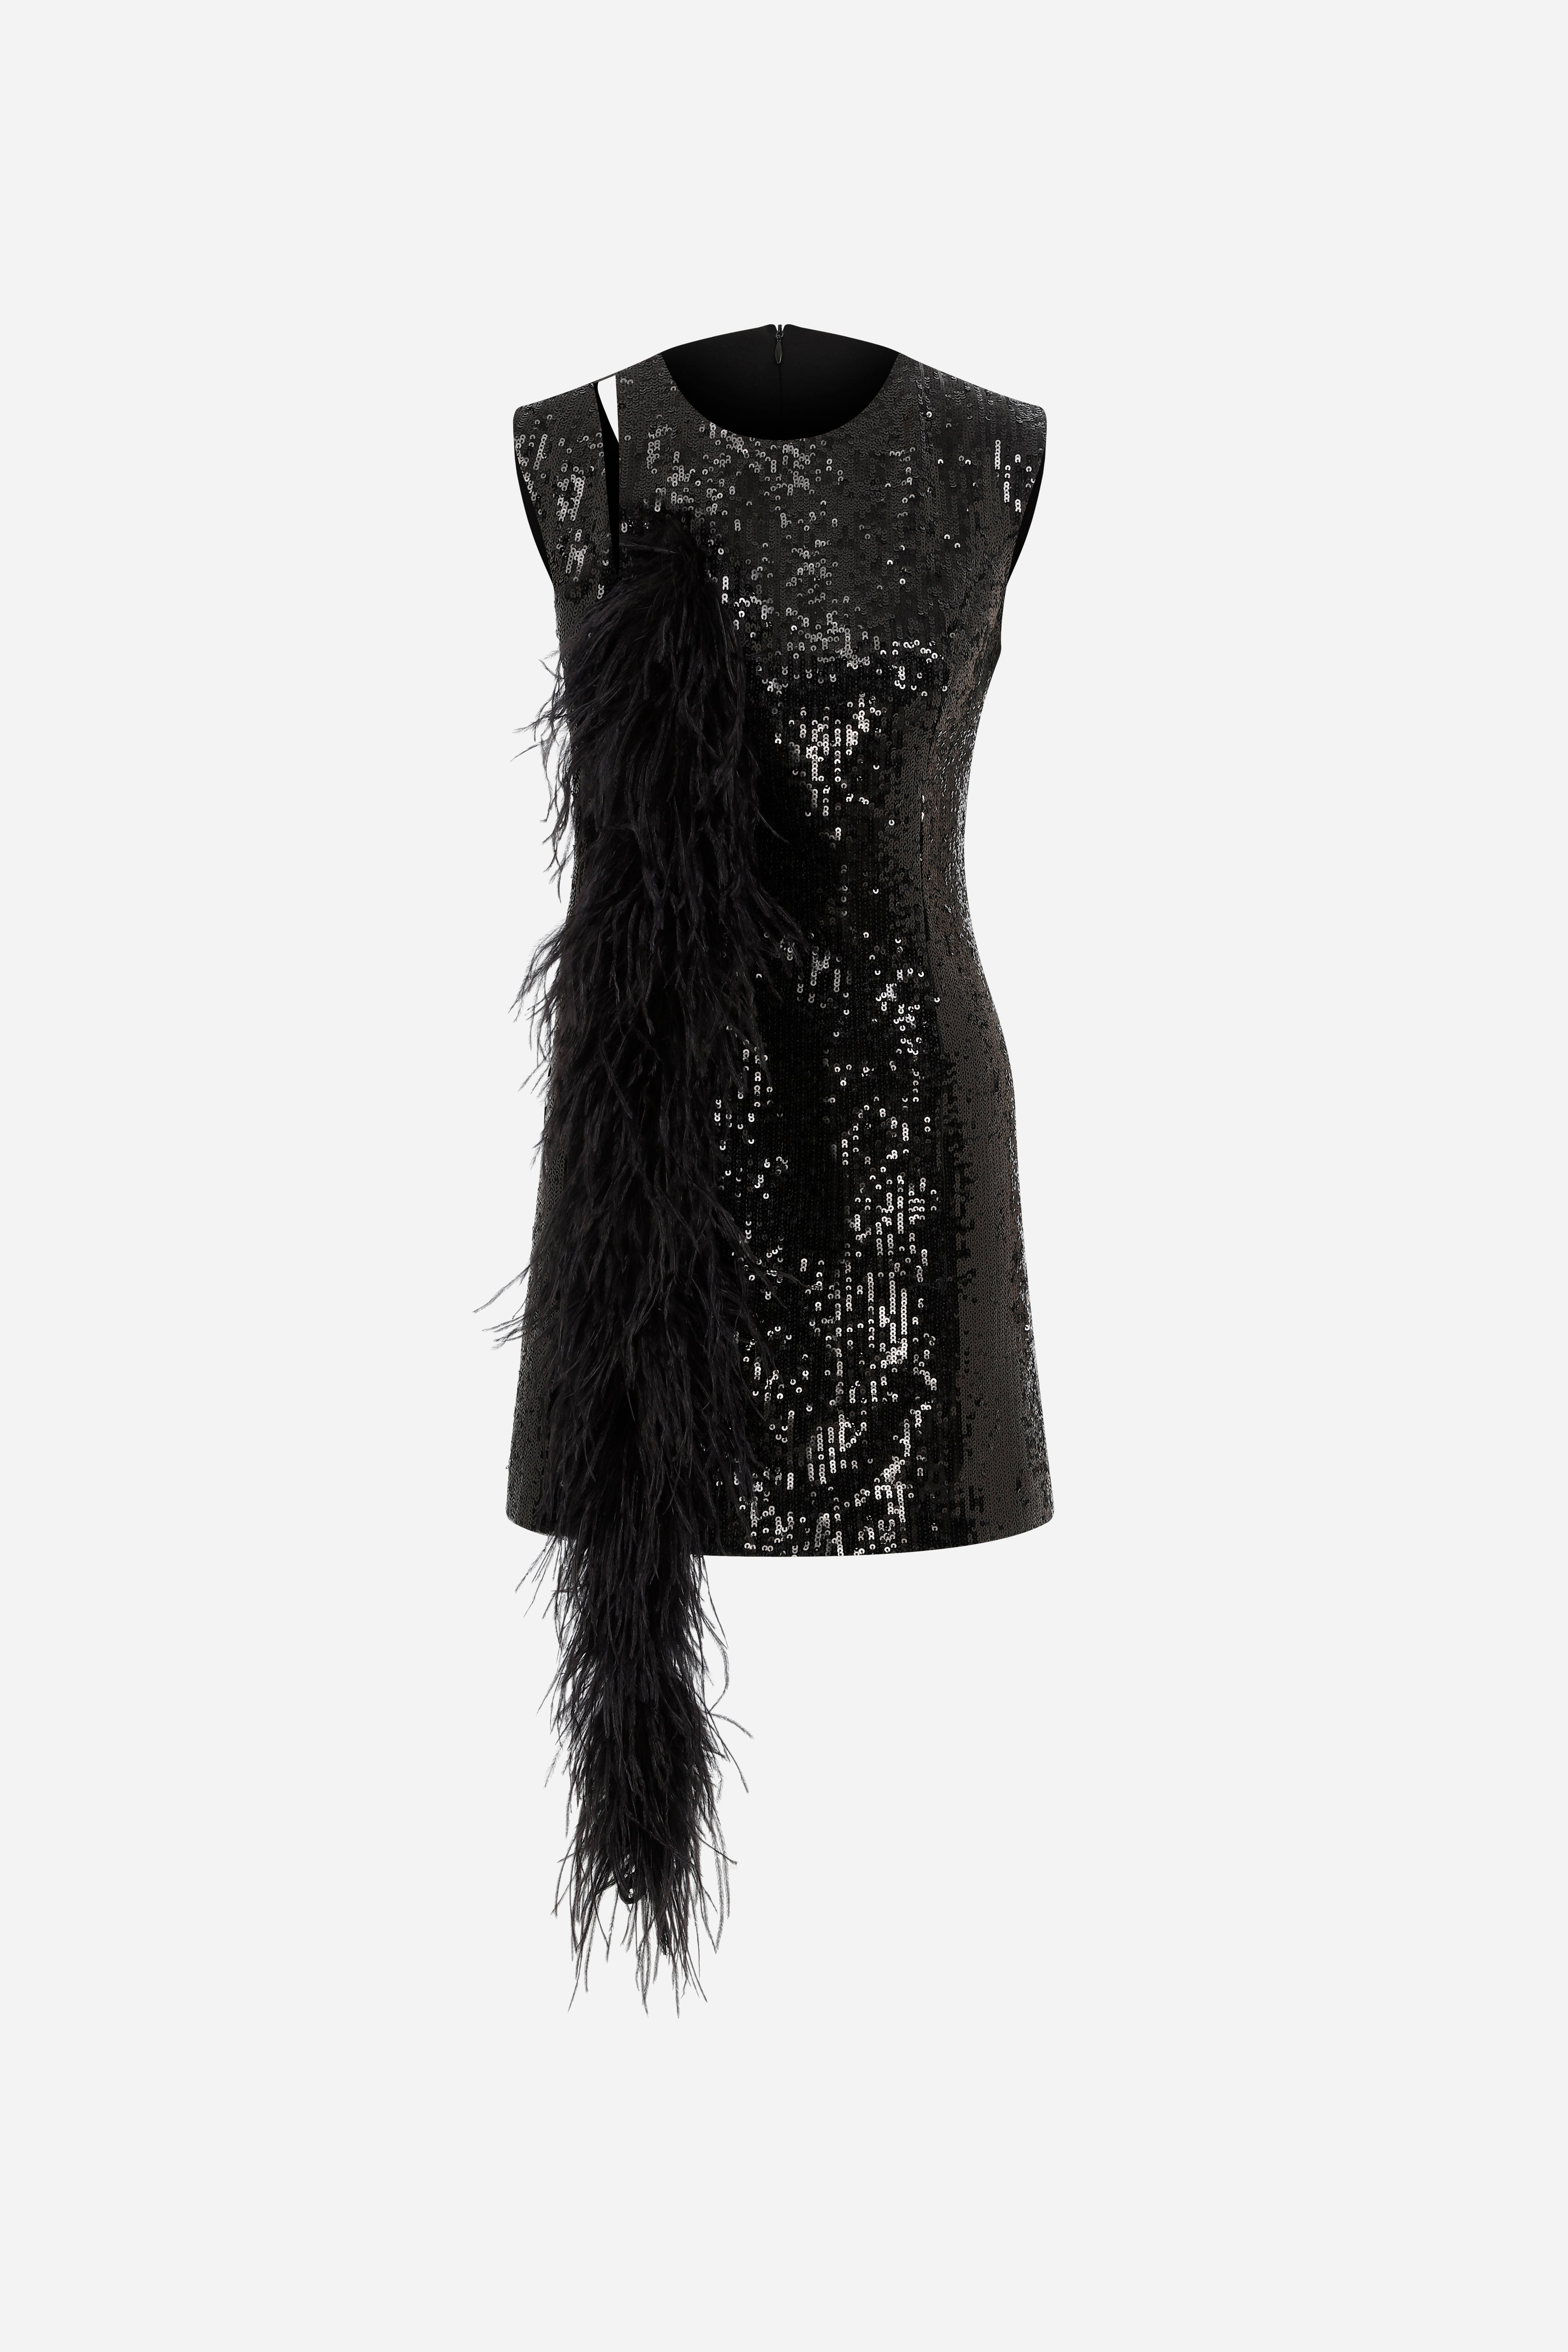 Lassy Vietnam Black Feather Trim Sequin Dress Make to Measure